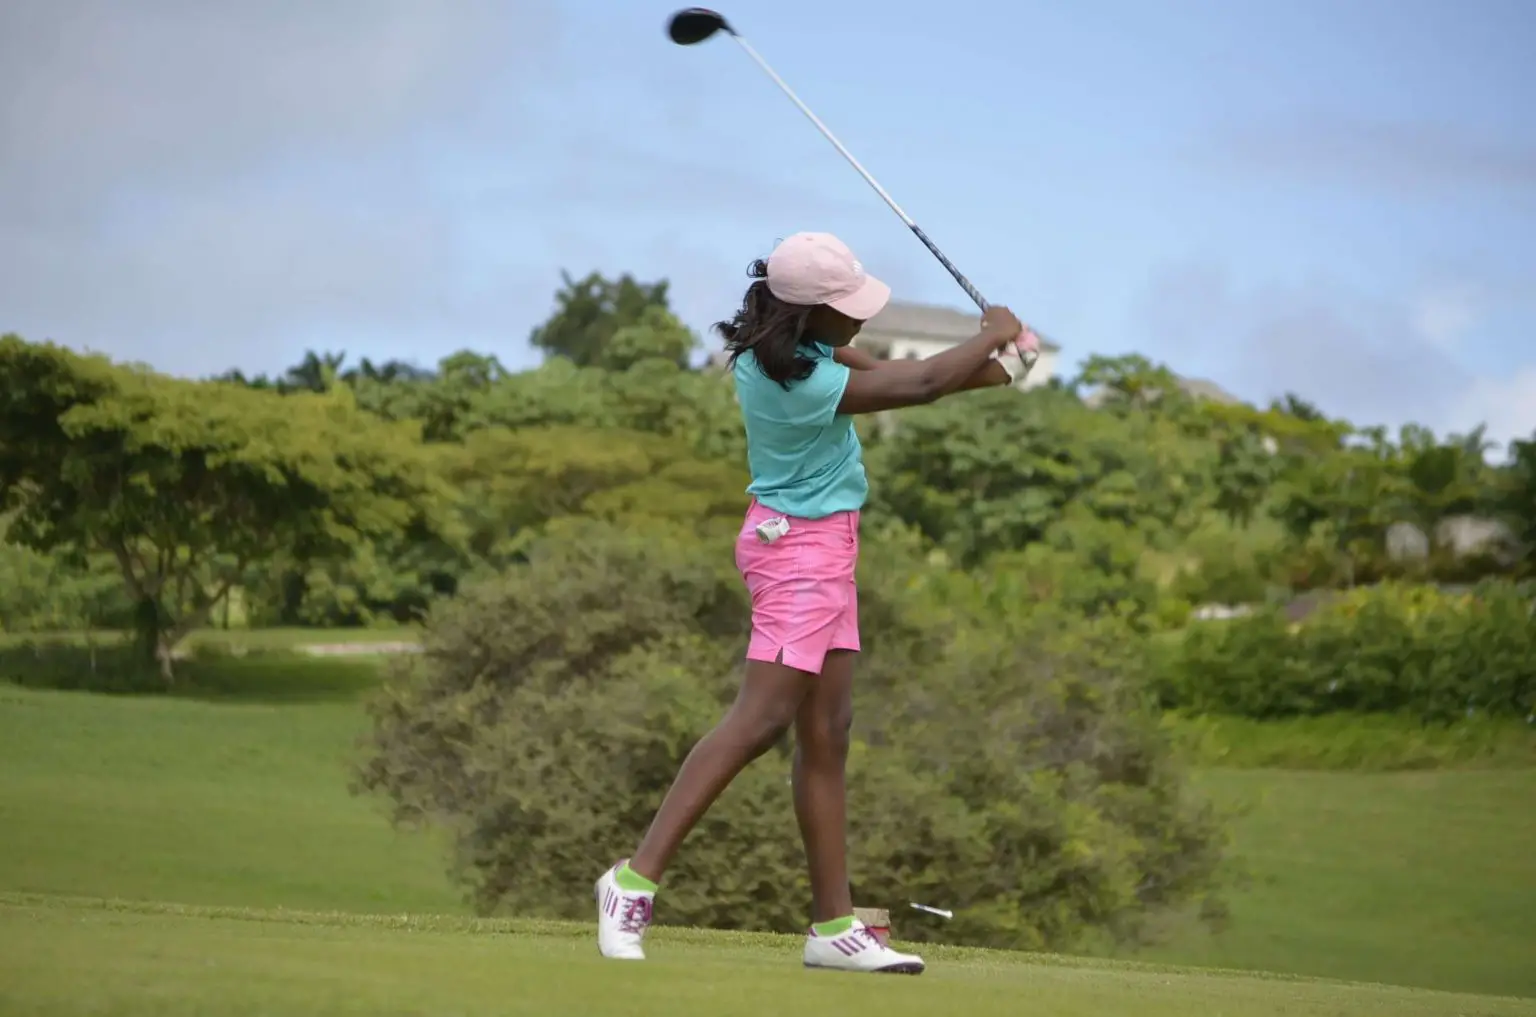 Black Golfer, Black Excellence, Black Golf Woman, Girl